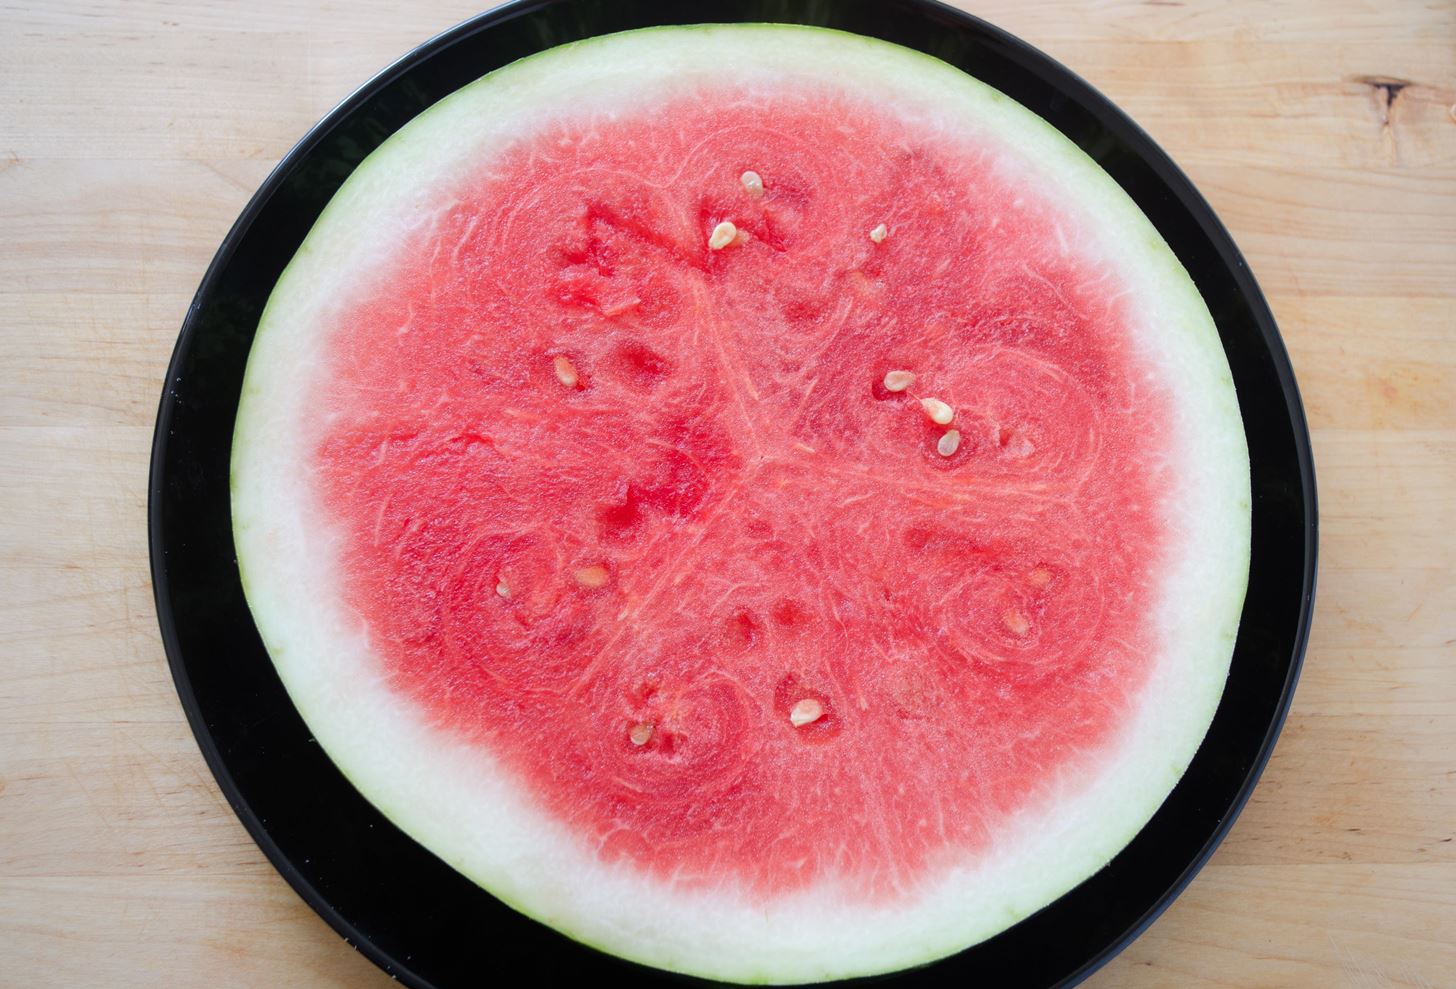 5 Ways to Turn Watermelon into Sweet & Savory Pizzas